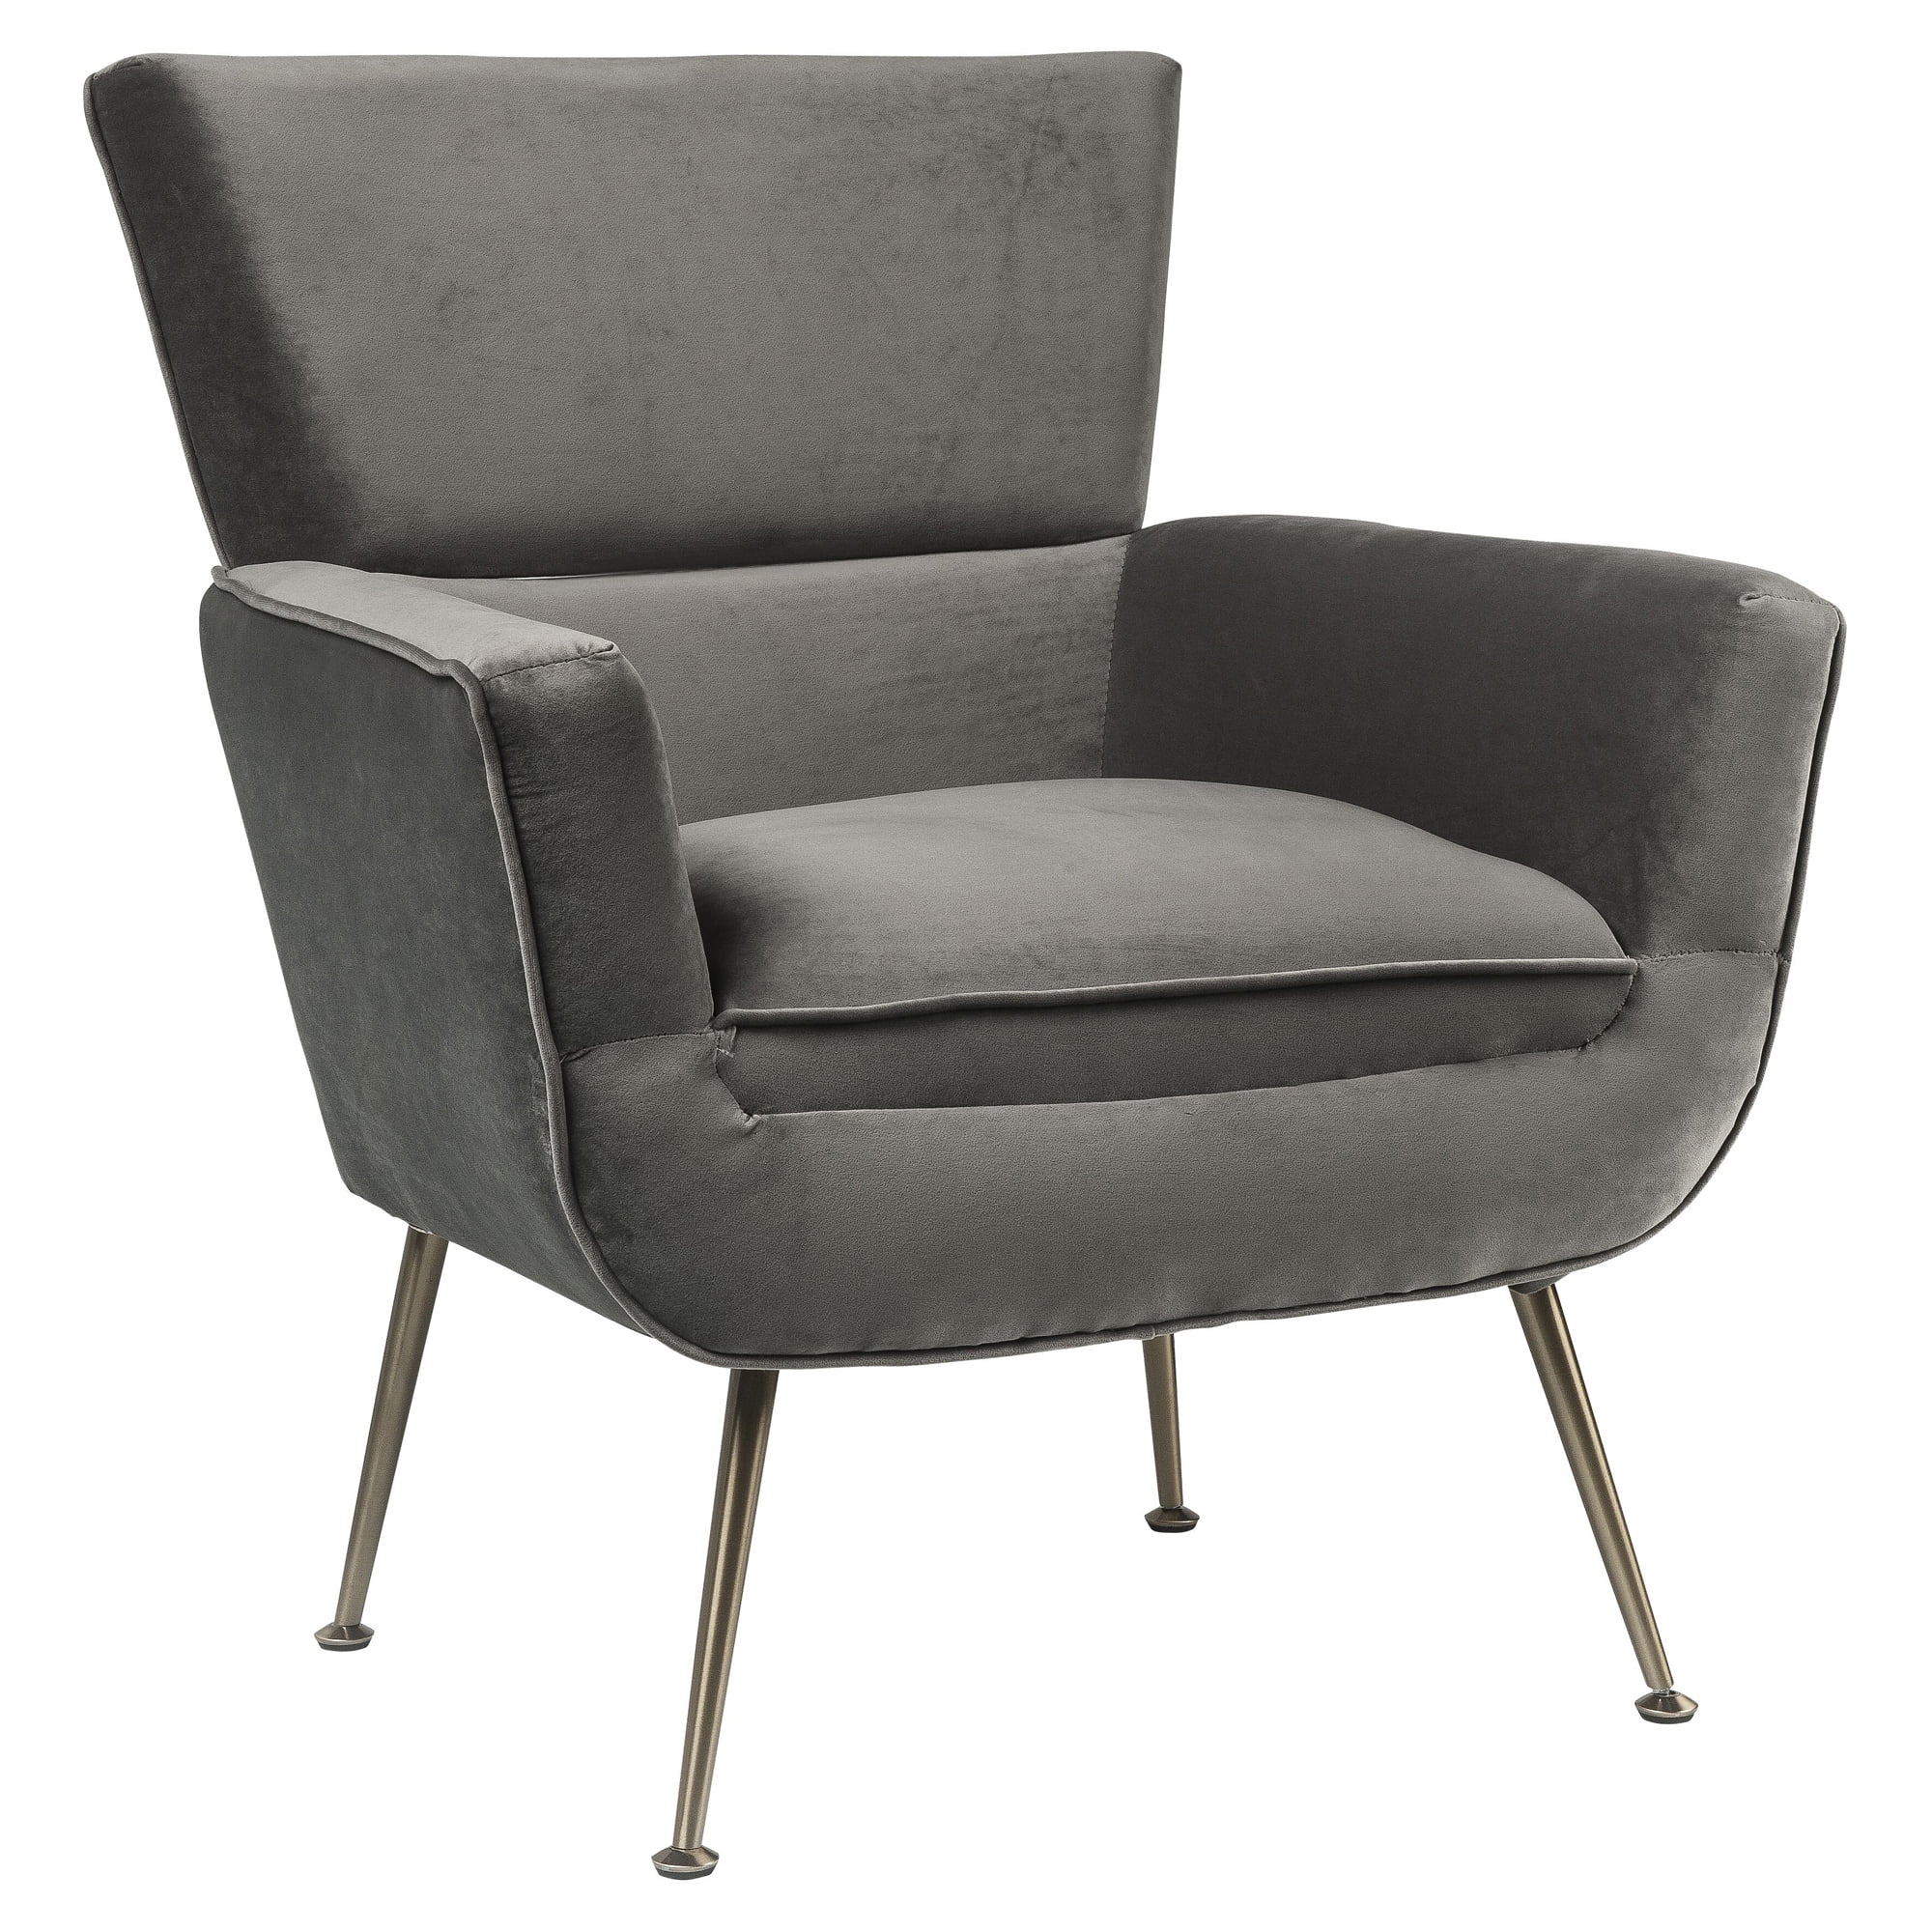 Picture of ACME 59522 Varik Accent Chair - Gray Velvet - 36 x 32 x 29 in.